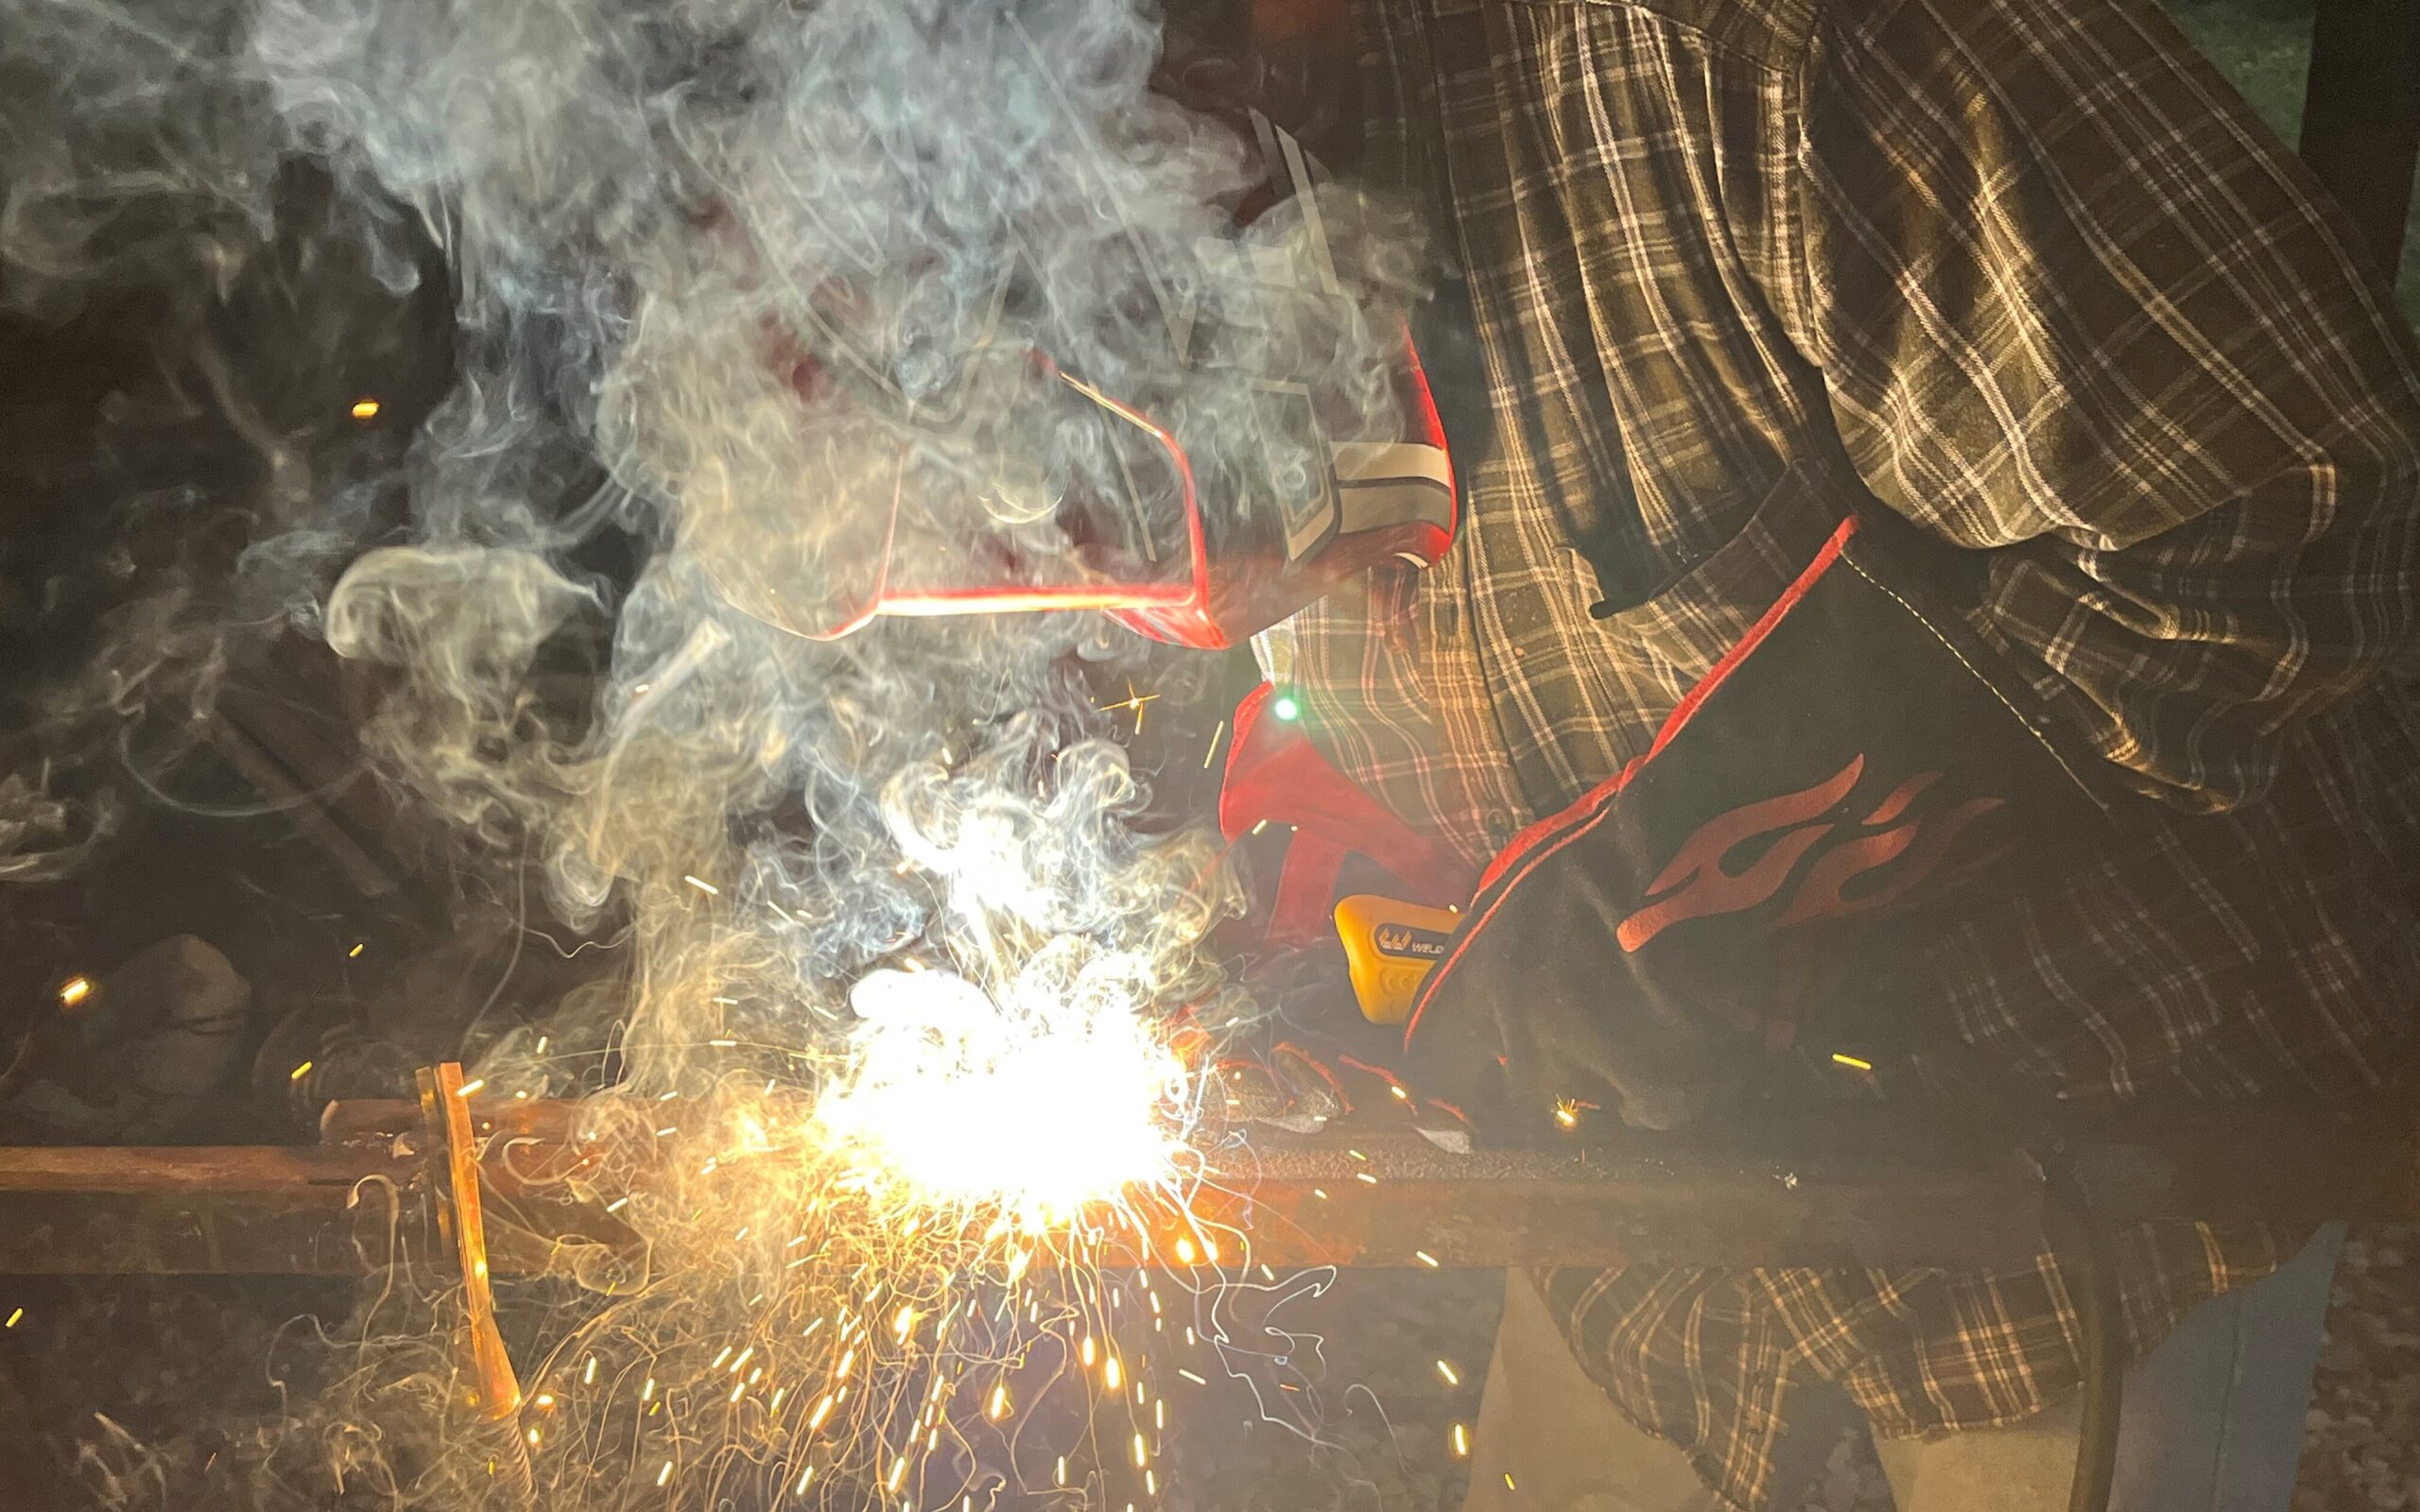 Picture of welding fumes surrounding a welder.